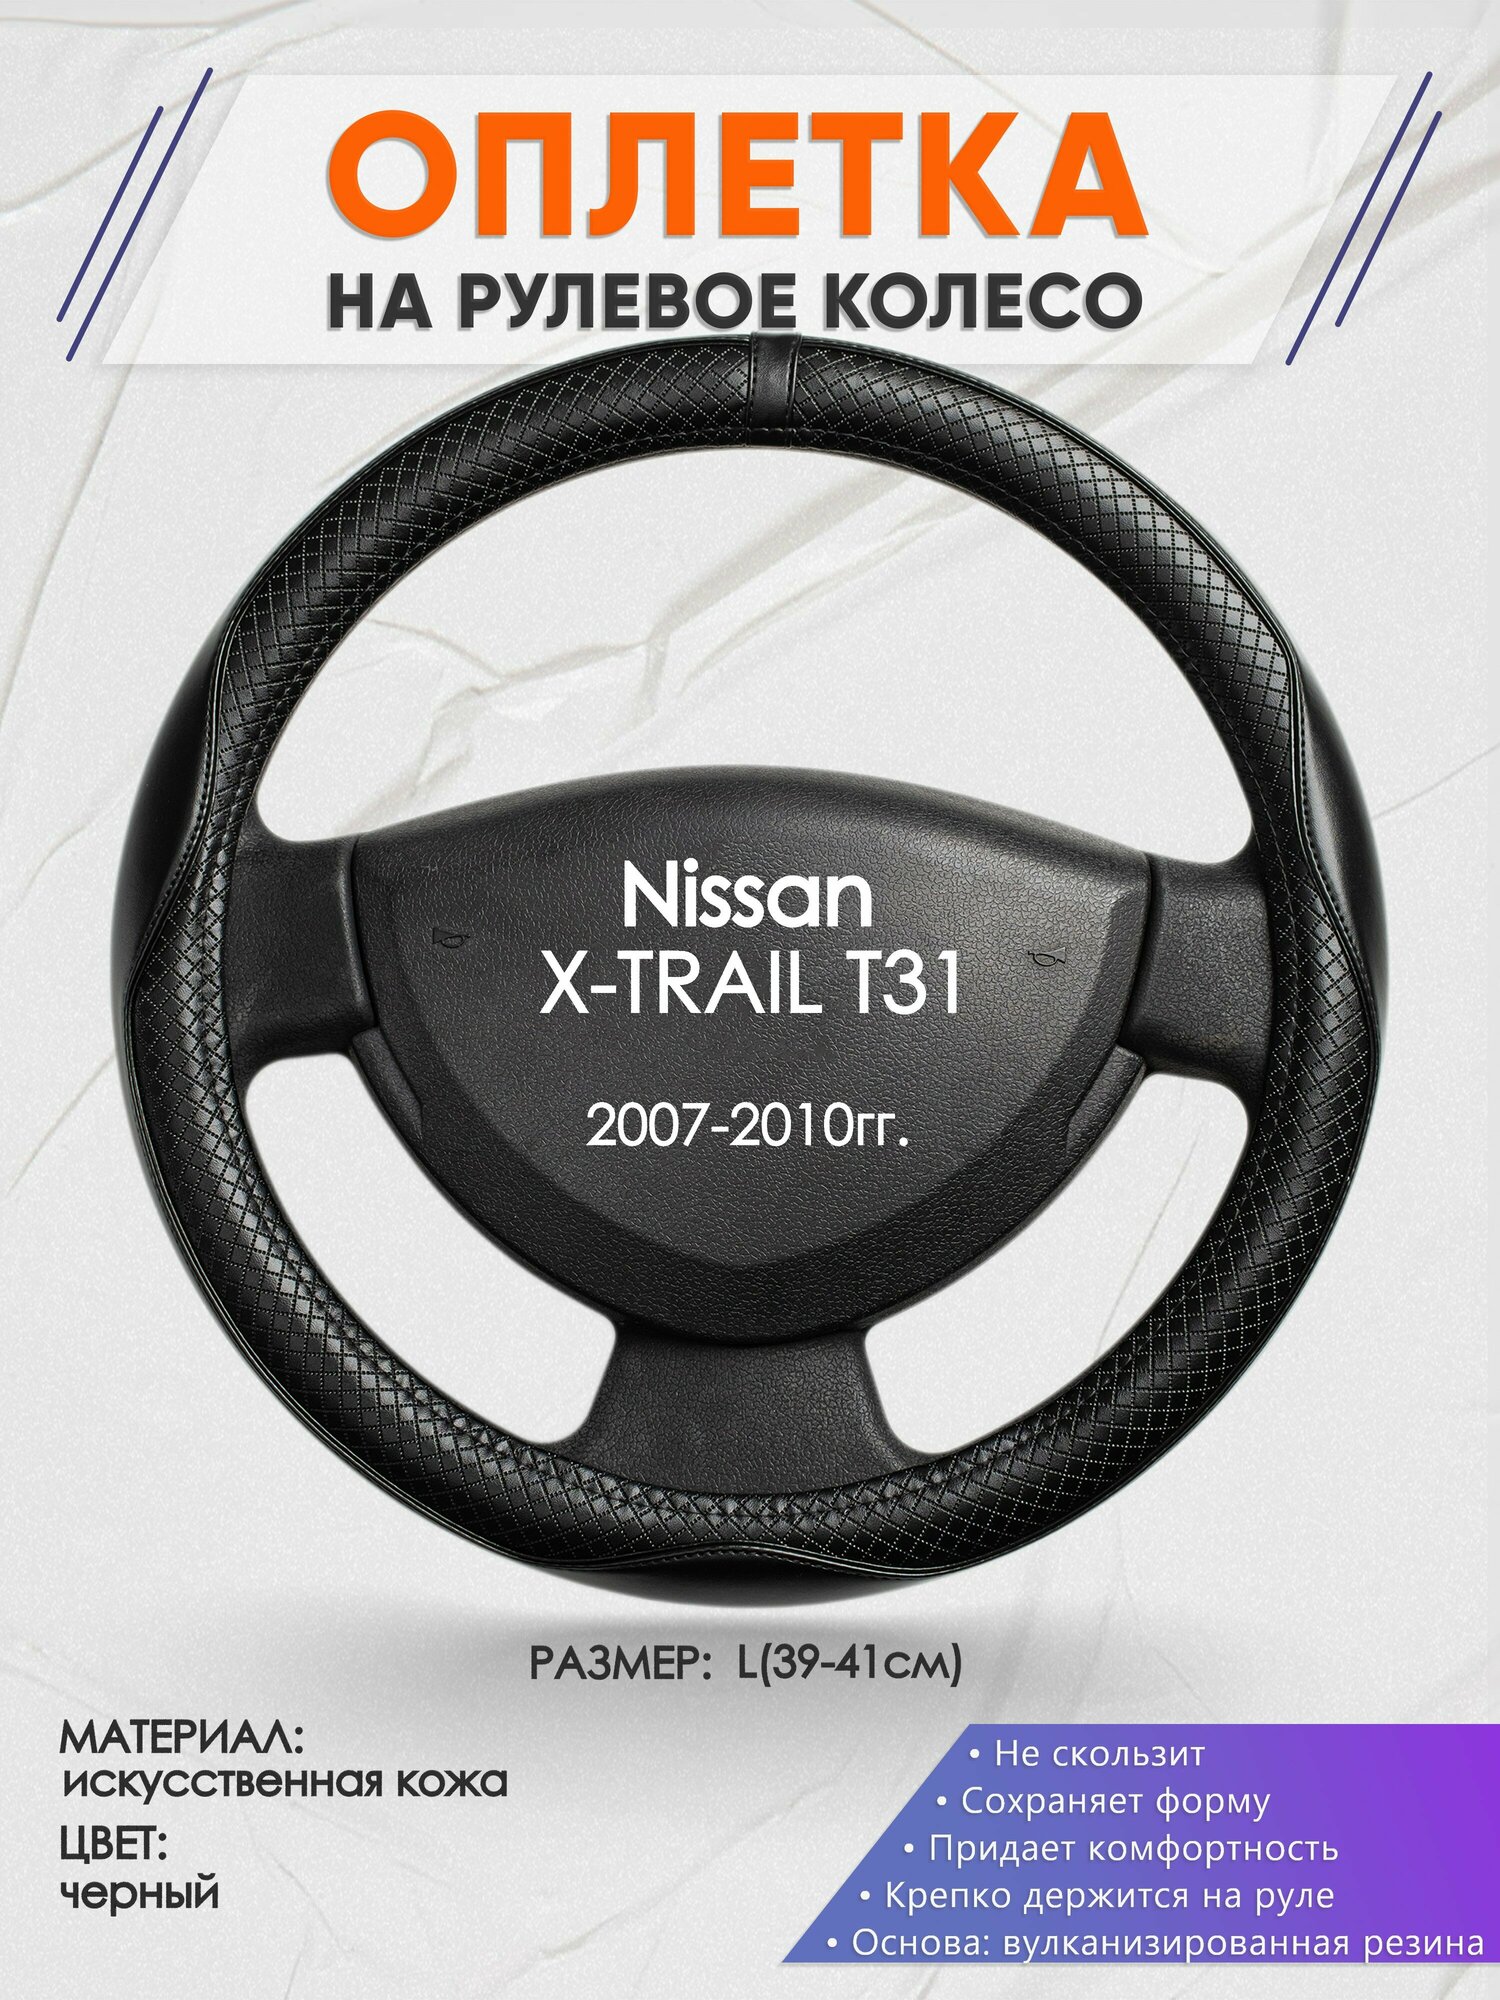 Оплетка на руль для Nissan X-TRAIL T31(Ниссан Икс Трейл) 2007-2010, L(39-41см), Искусственная кожа 87